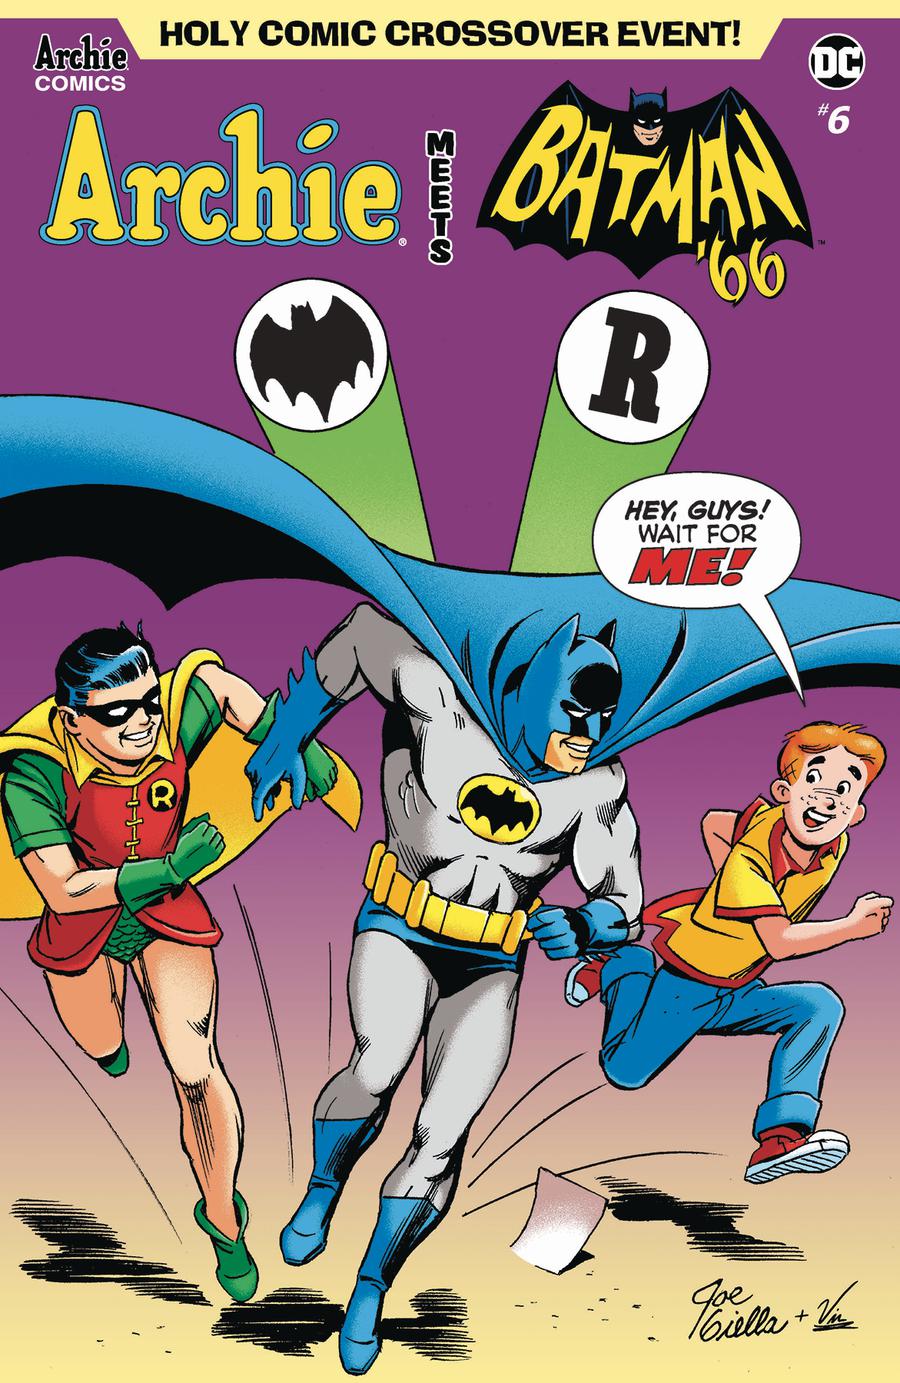 Archie Meets Batman 66 #6 Cover B Variant Joe Giella & Vincent Lovallo Cover